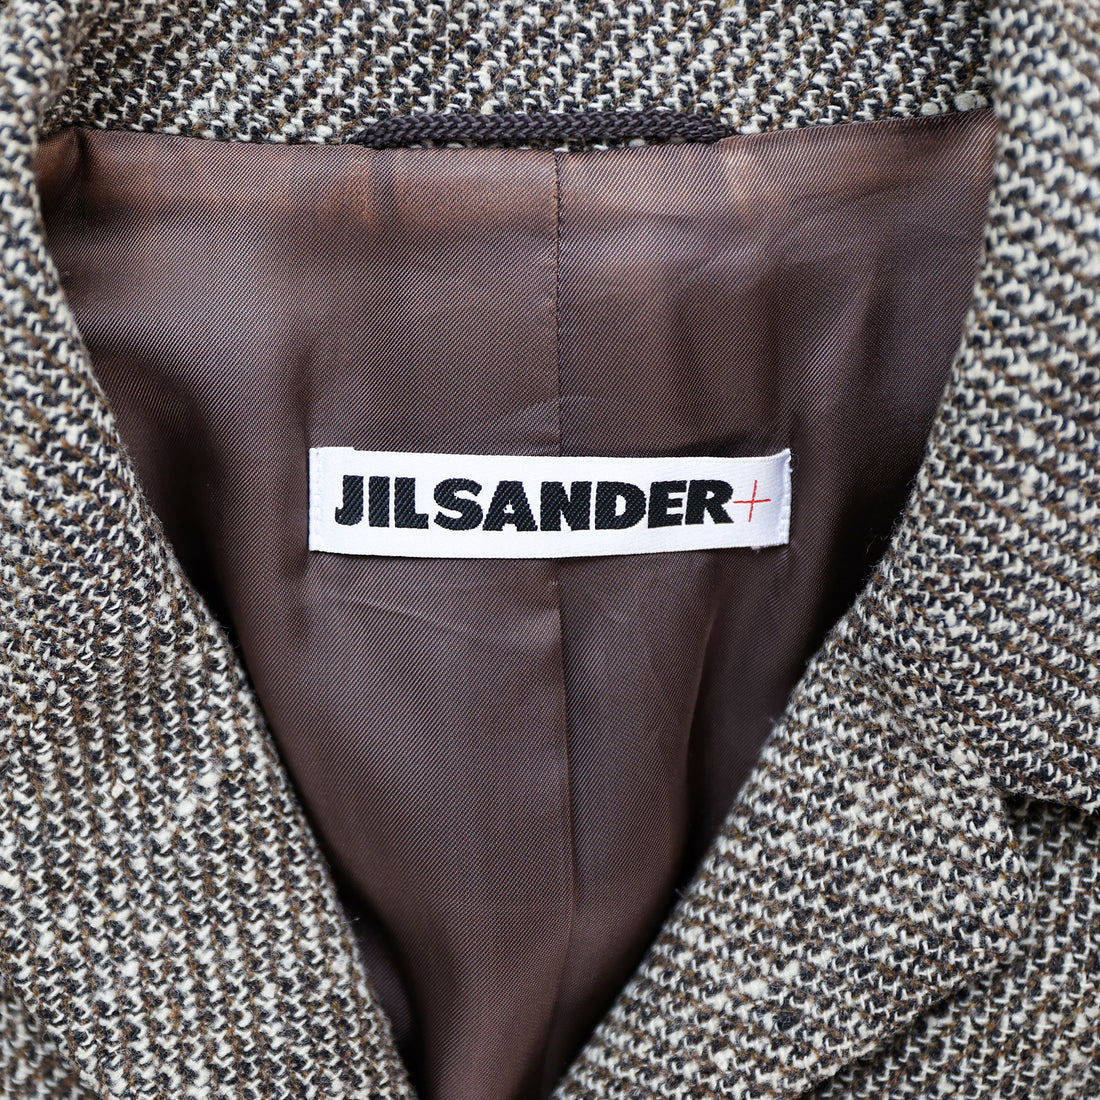 Jil Sander blazer with breast pocket